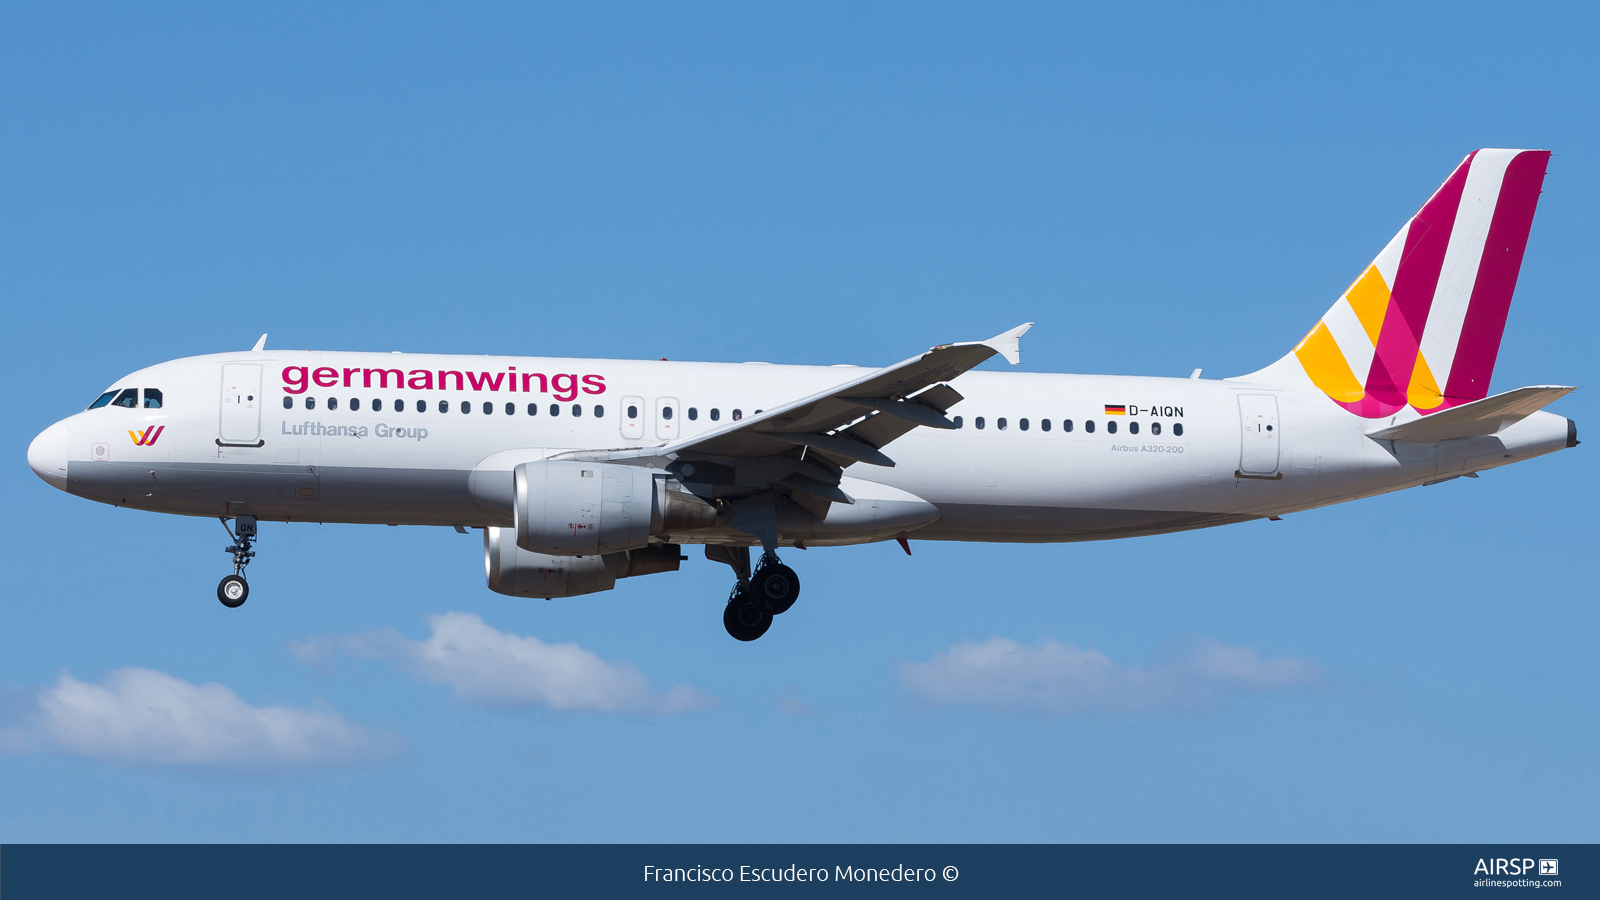 Germanwings  Airbus A320  D-AIQN